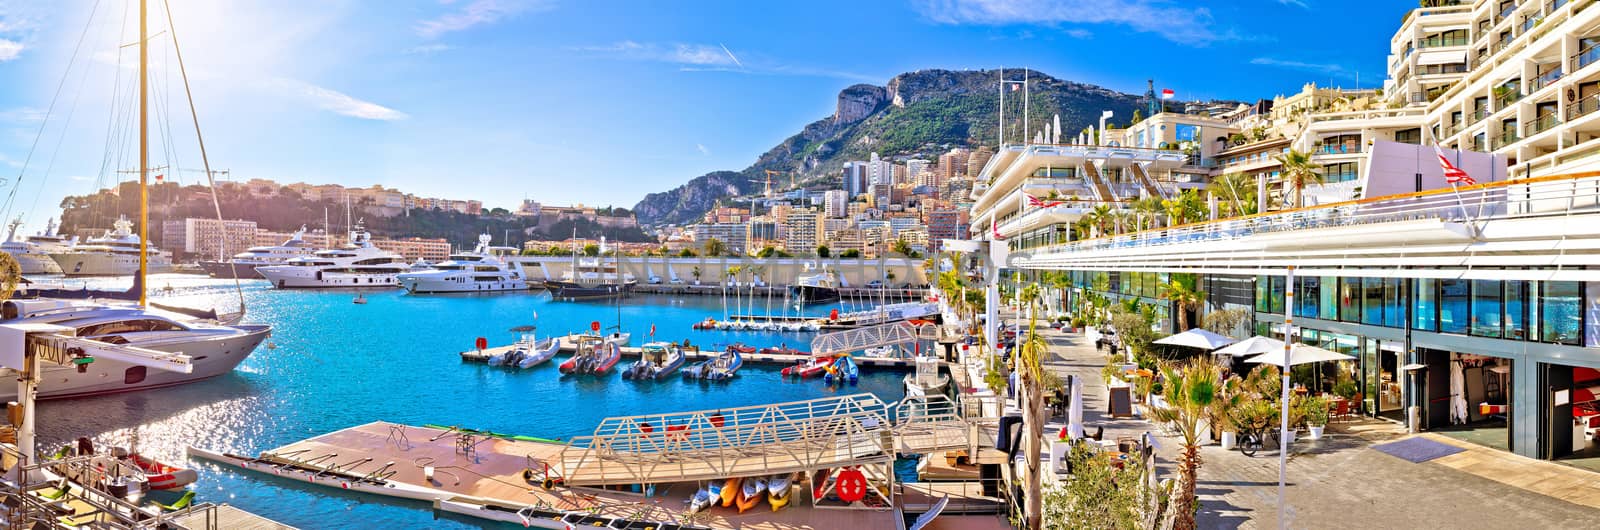 Monte Carlo yachting harbor and waterfront amazing panoramic view, Principality of Monaco